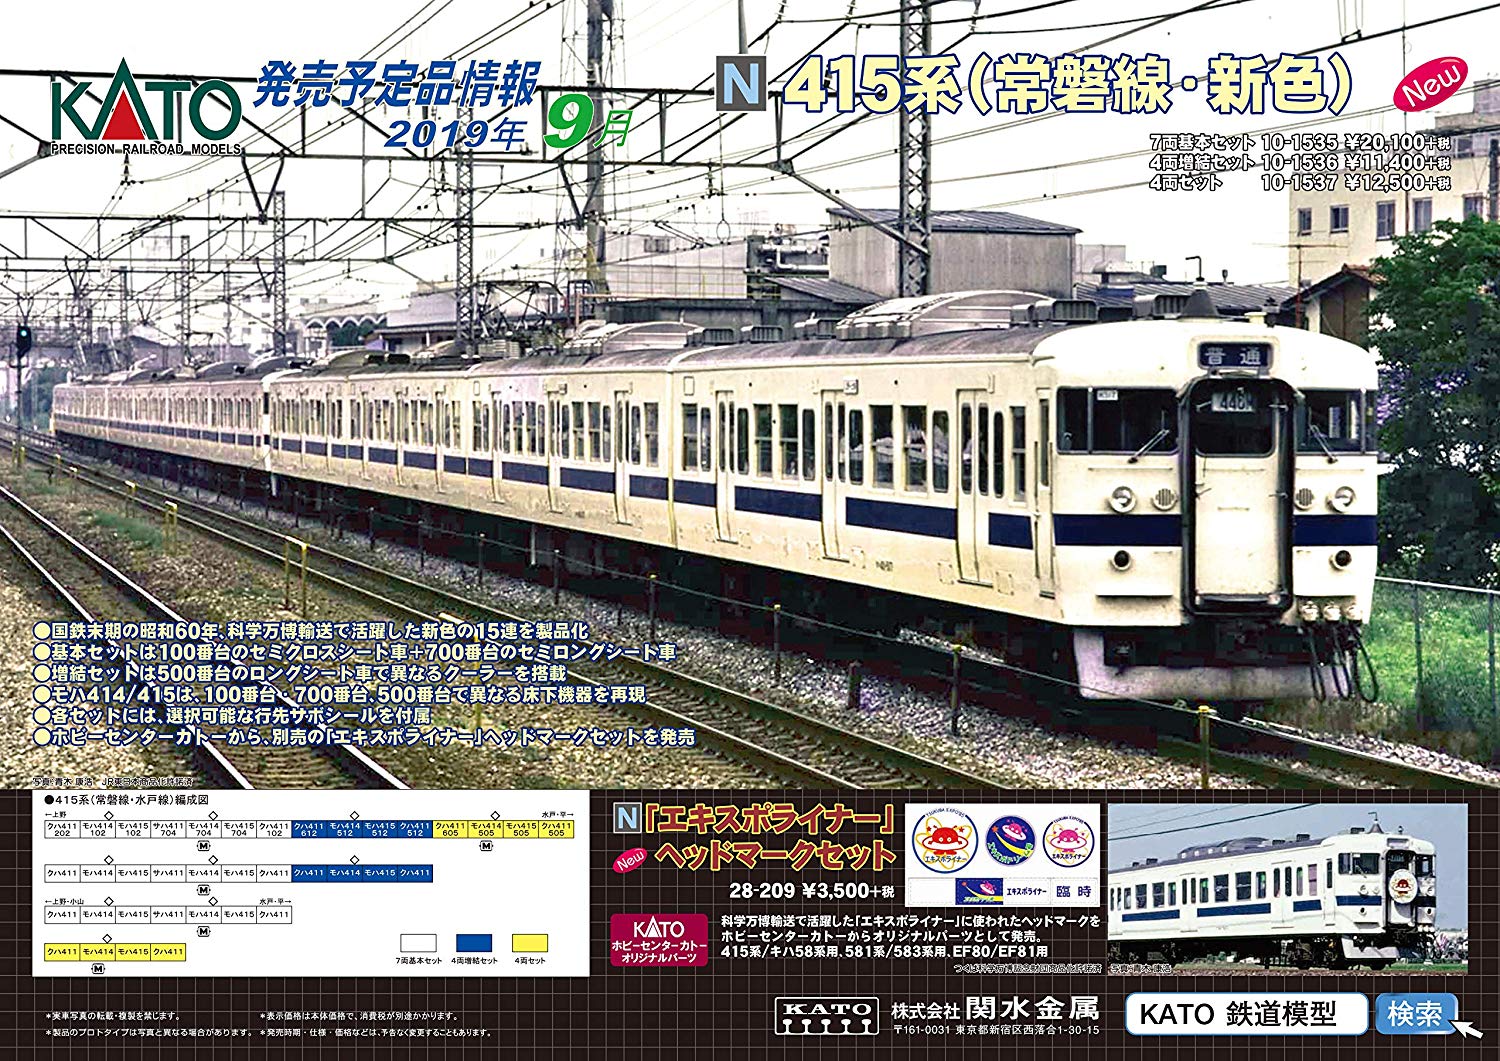 10-1537 Series 415 (Joban Line/New Color) (4-Car Set)